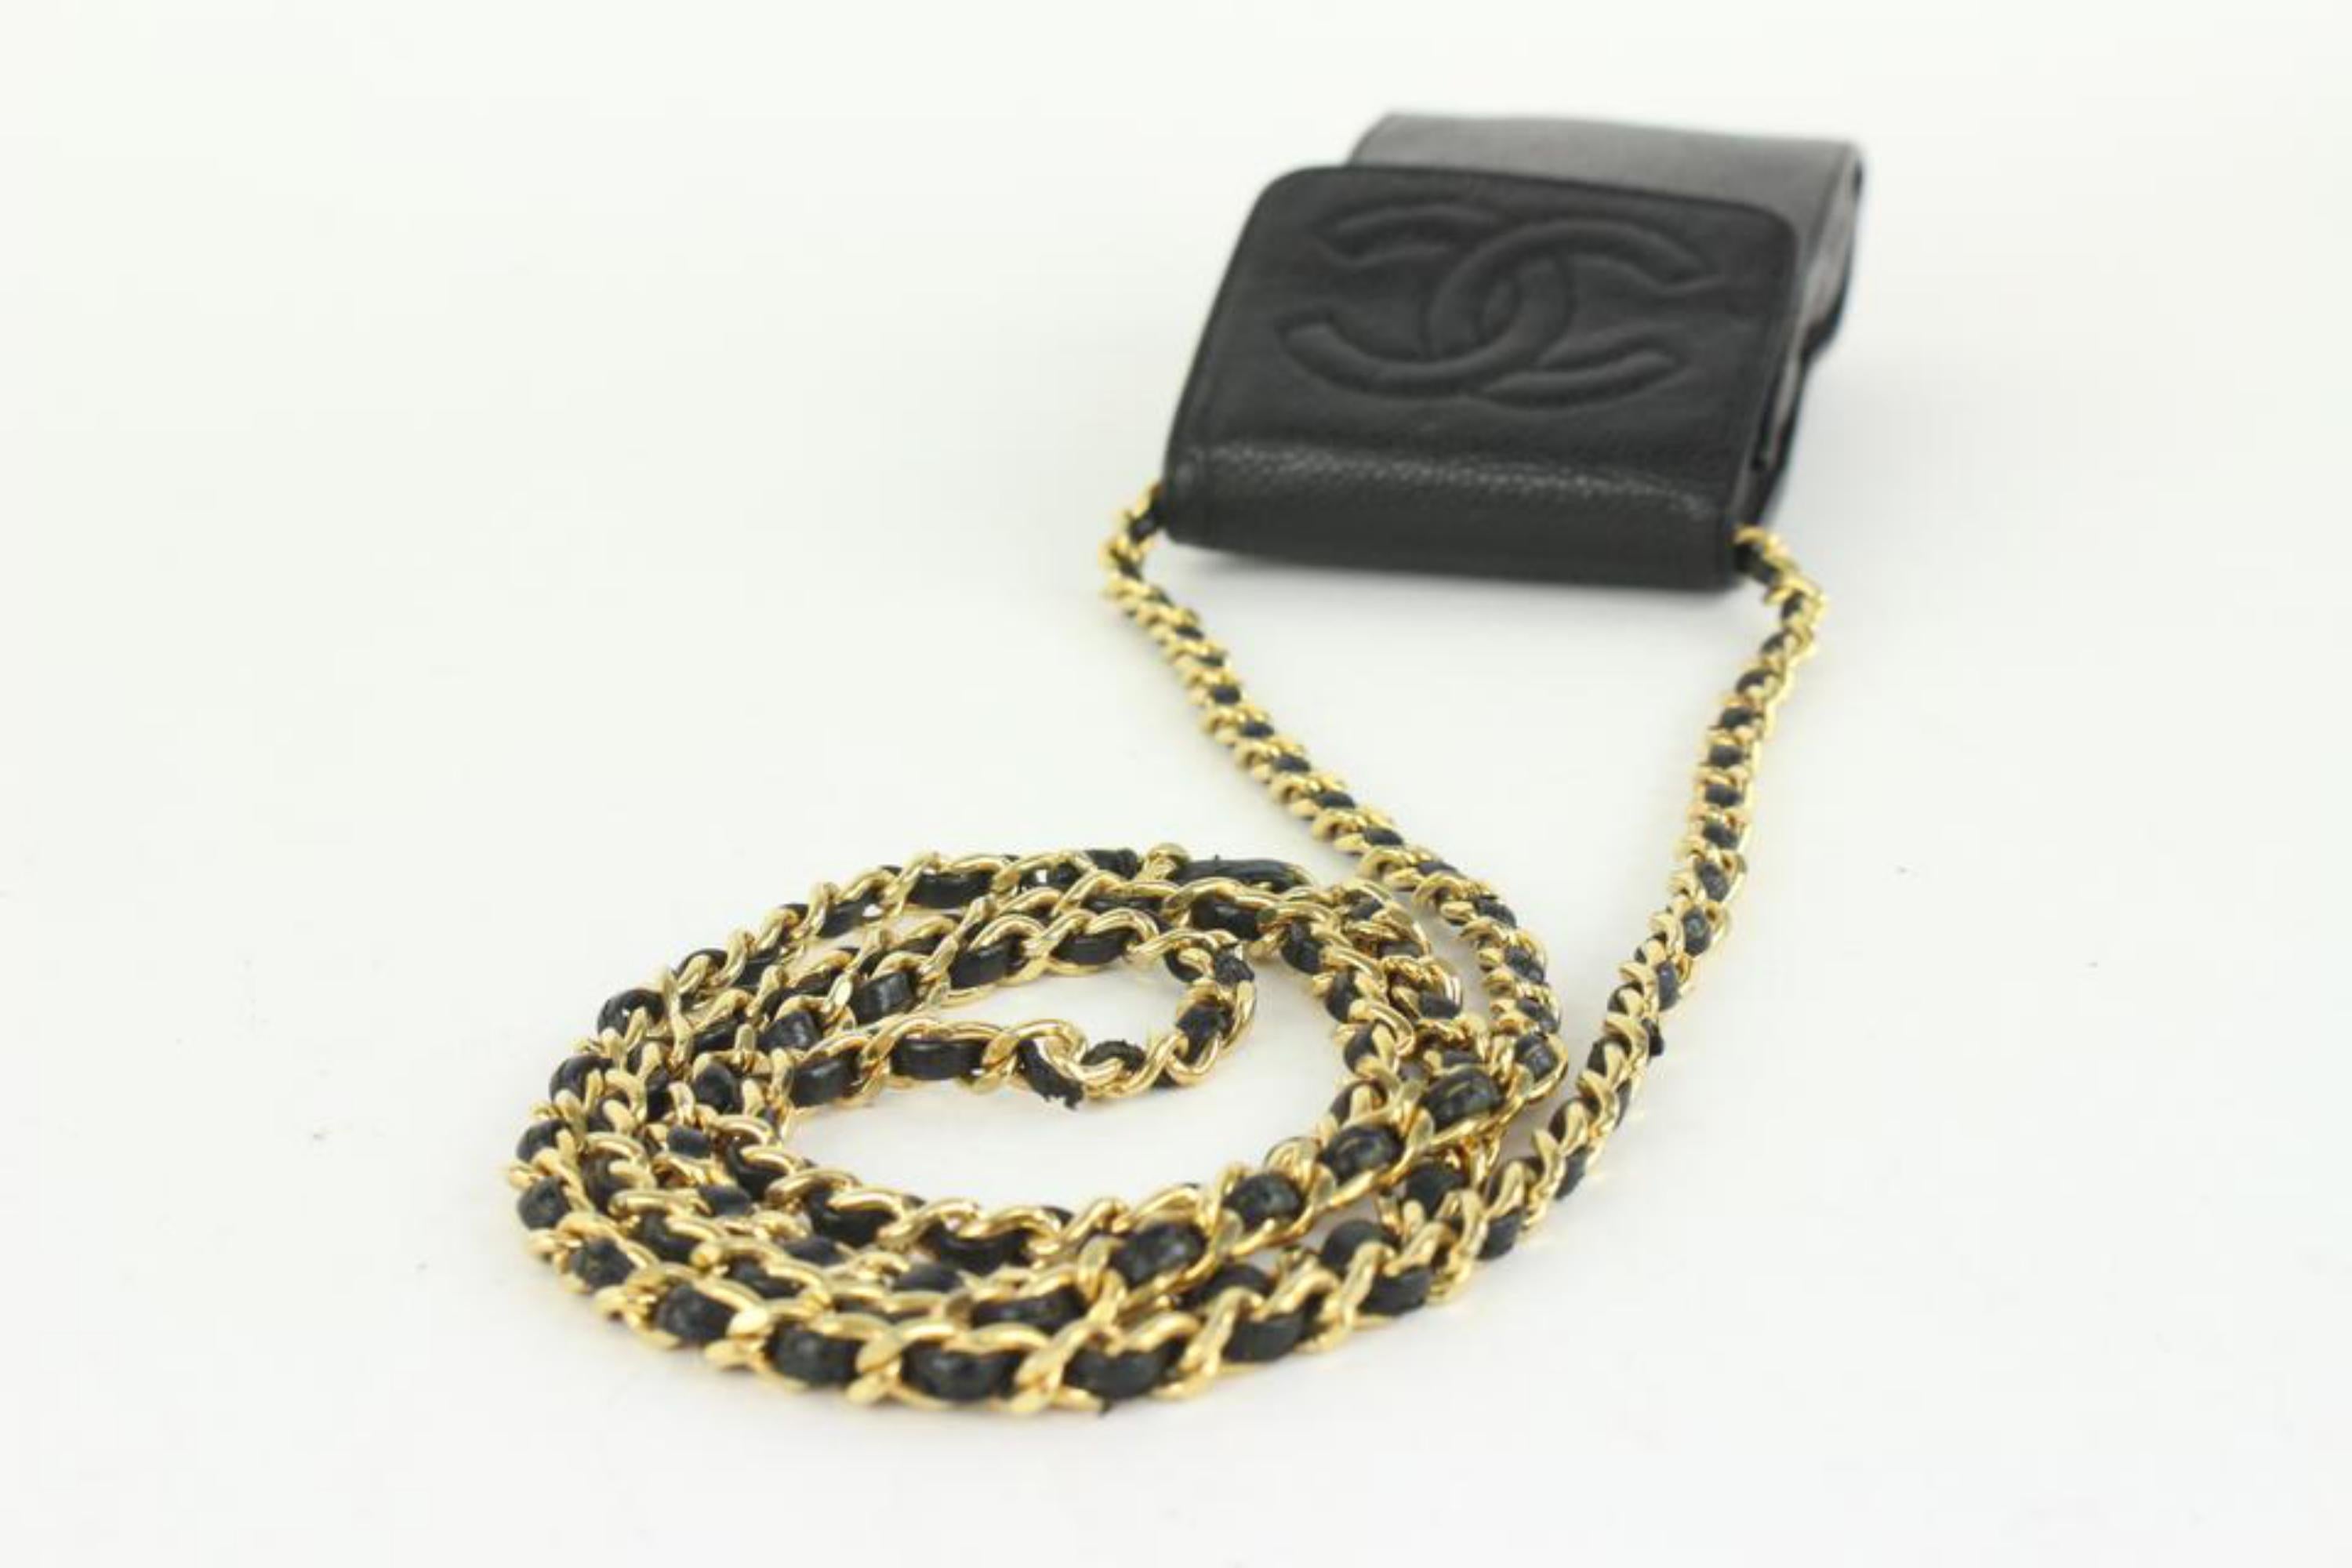 Women's Chanel Black Caviar Mobile Case Wallet on Chain 108c16 For Sale